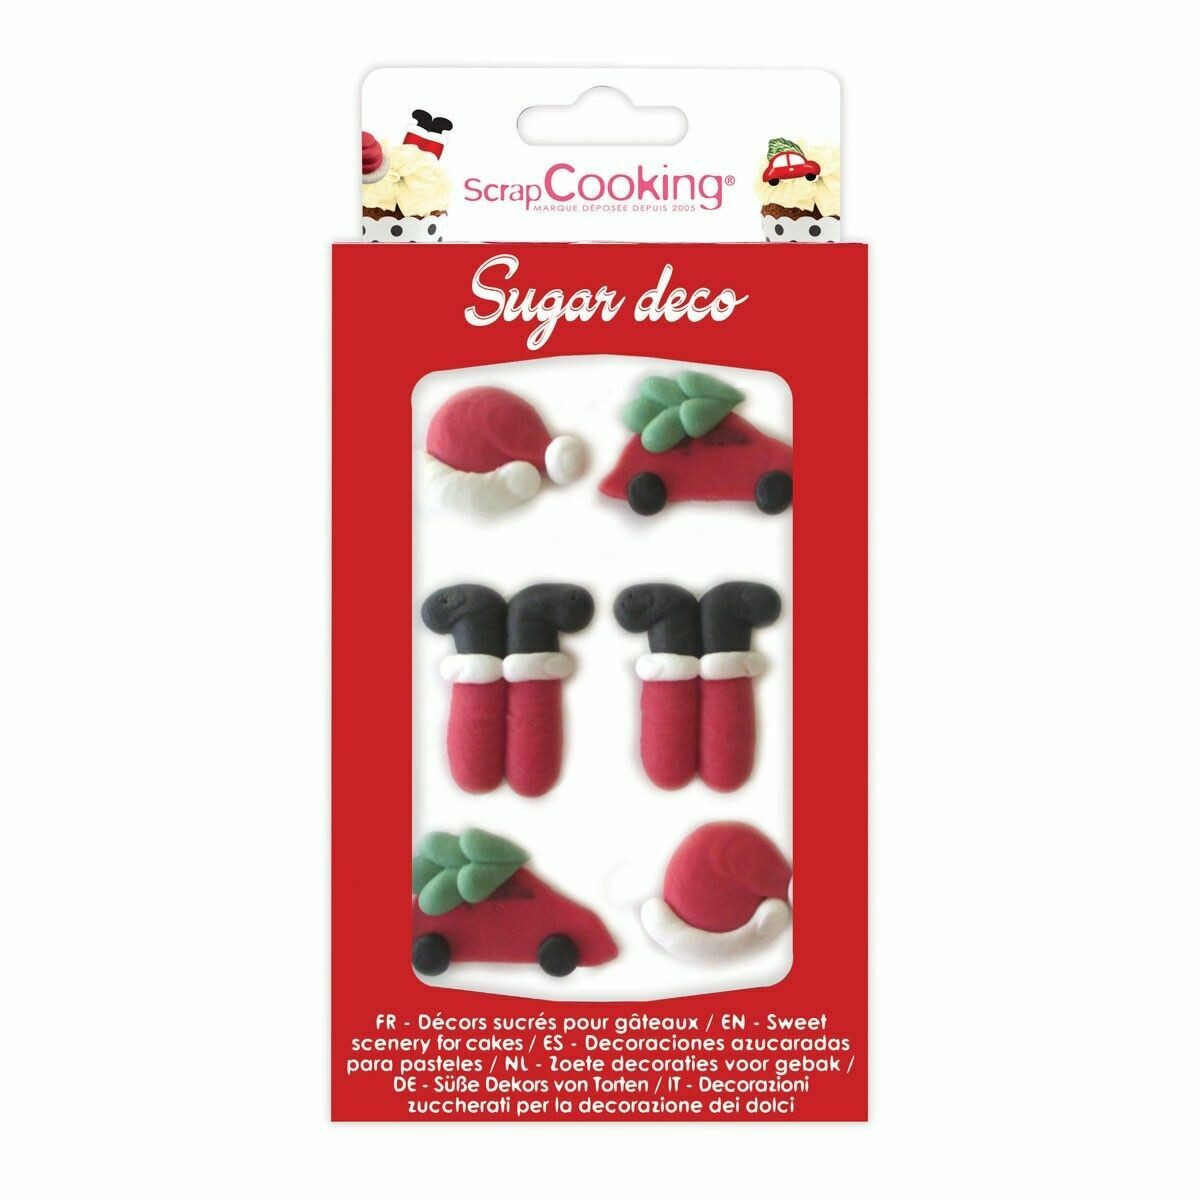 ScrapCooking Sugar Decorations -SANTA CLAUS 6Τμχ - Βρώσιμα Χριστουγεννιάτικα Ζαχαρωτά